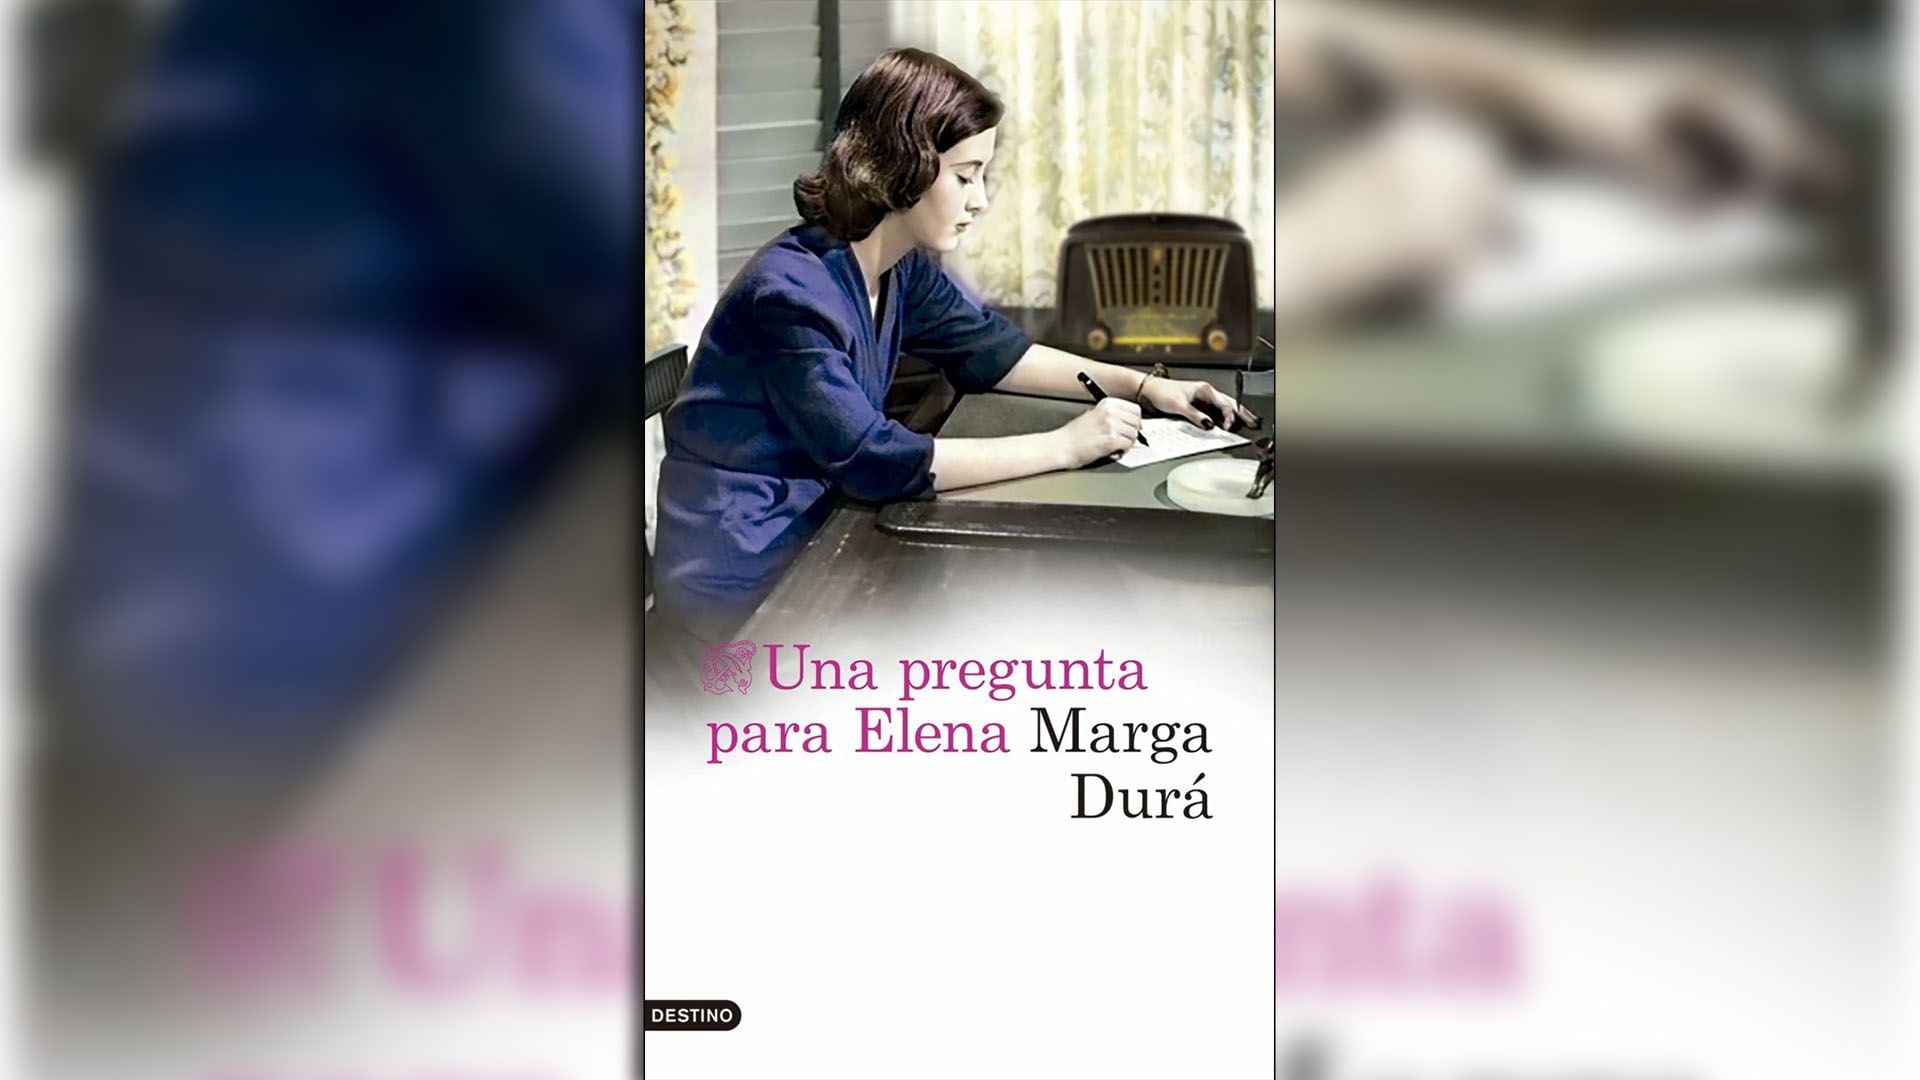 'A question for Elena', by Marga Durá (Destino)